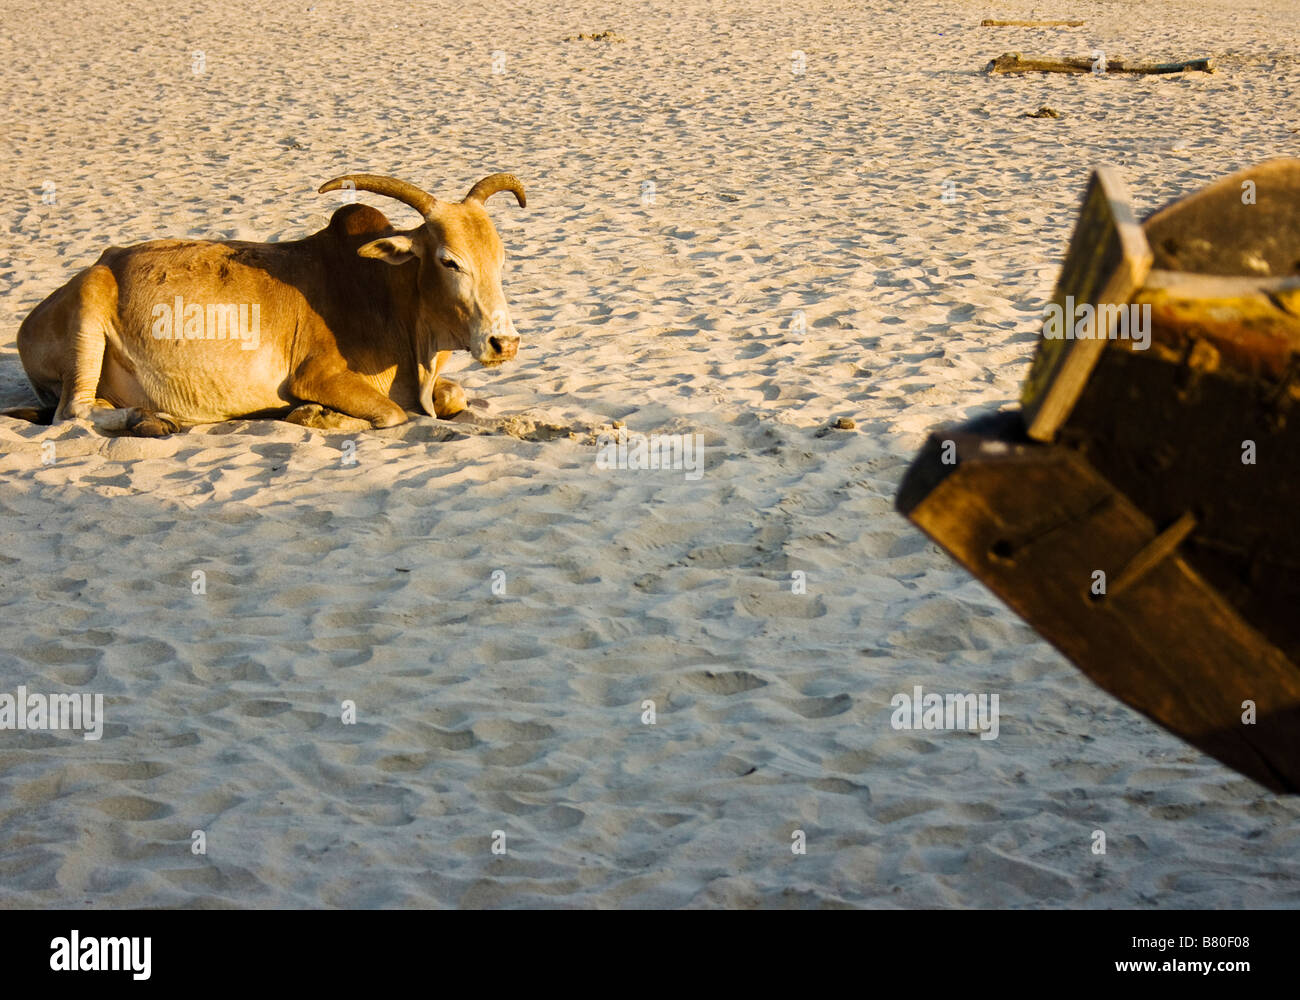 A cow on an Indian beach Stock Photo